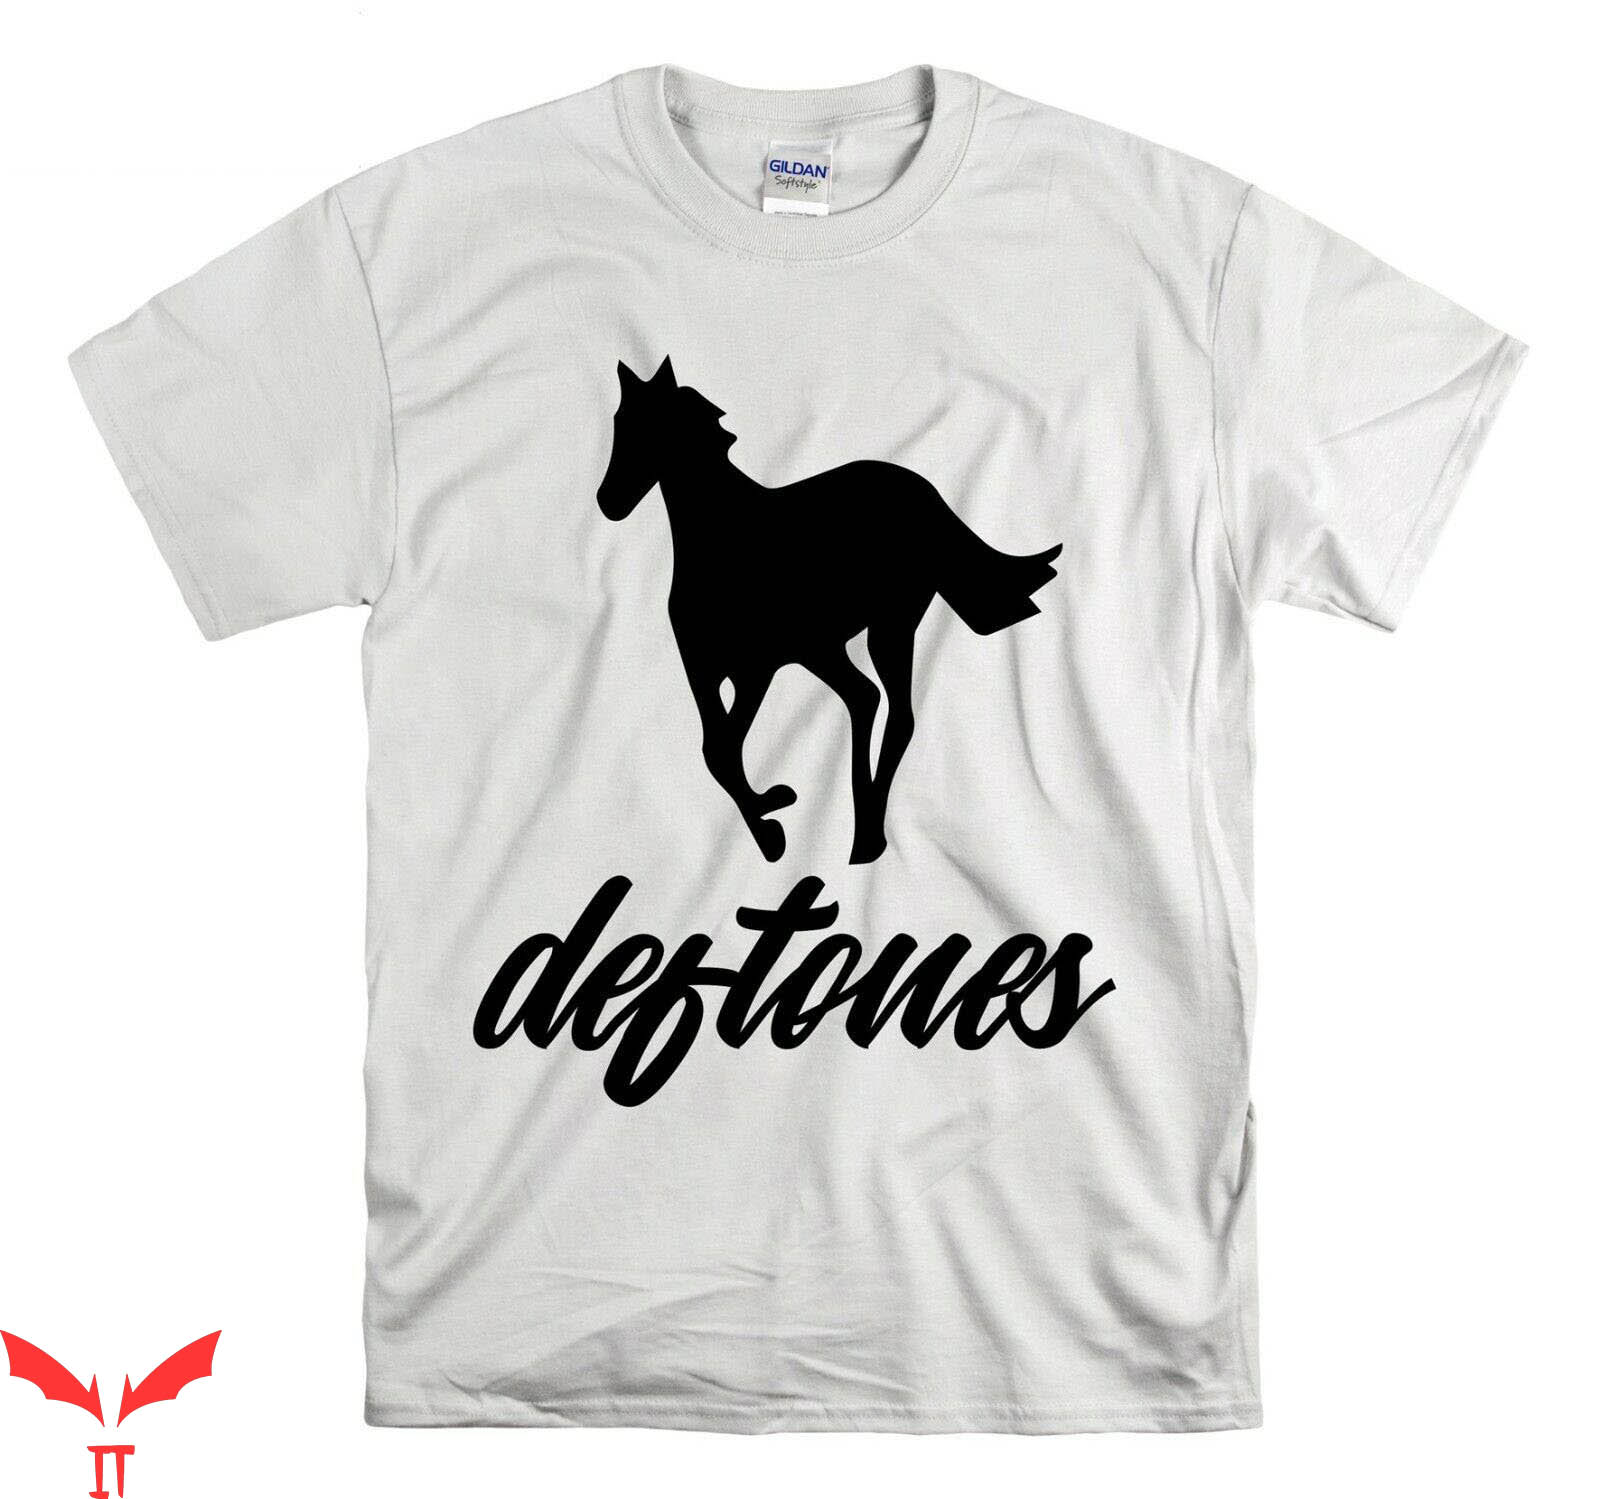 Vintage Deftones T-Shirt American Alternative Metal Music